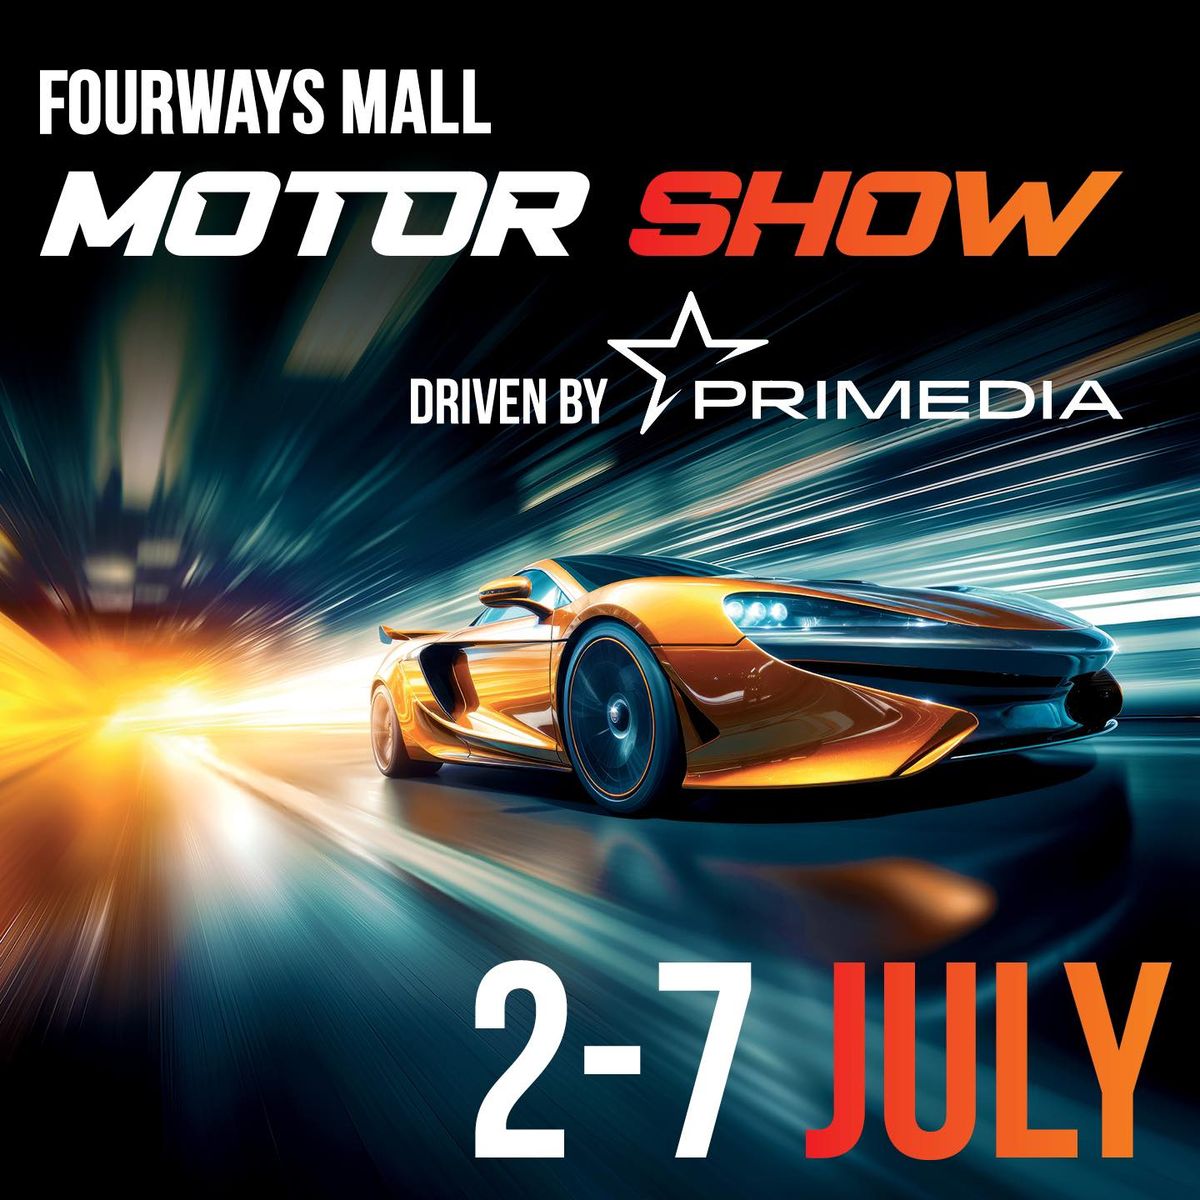 Fourways Mall Motor Show, Driven by Primedia.